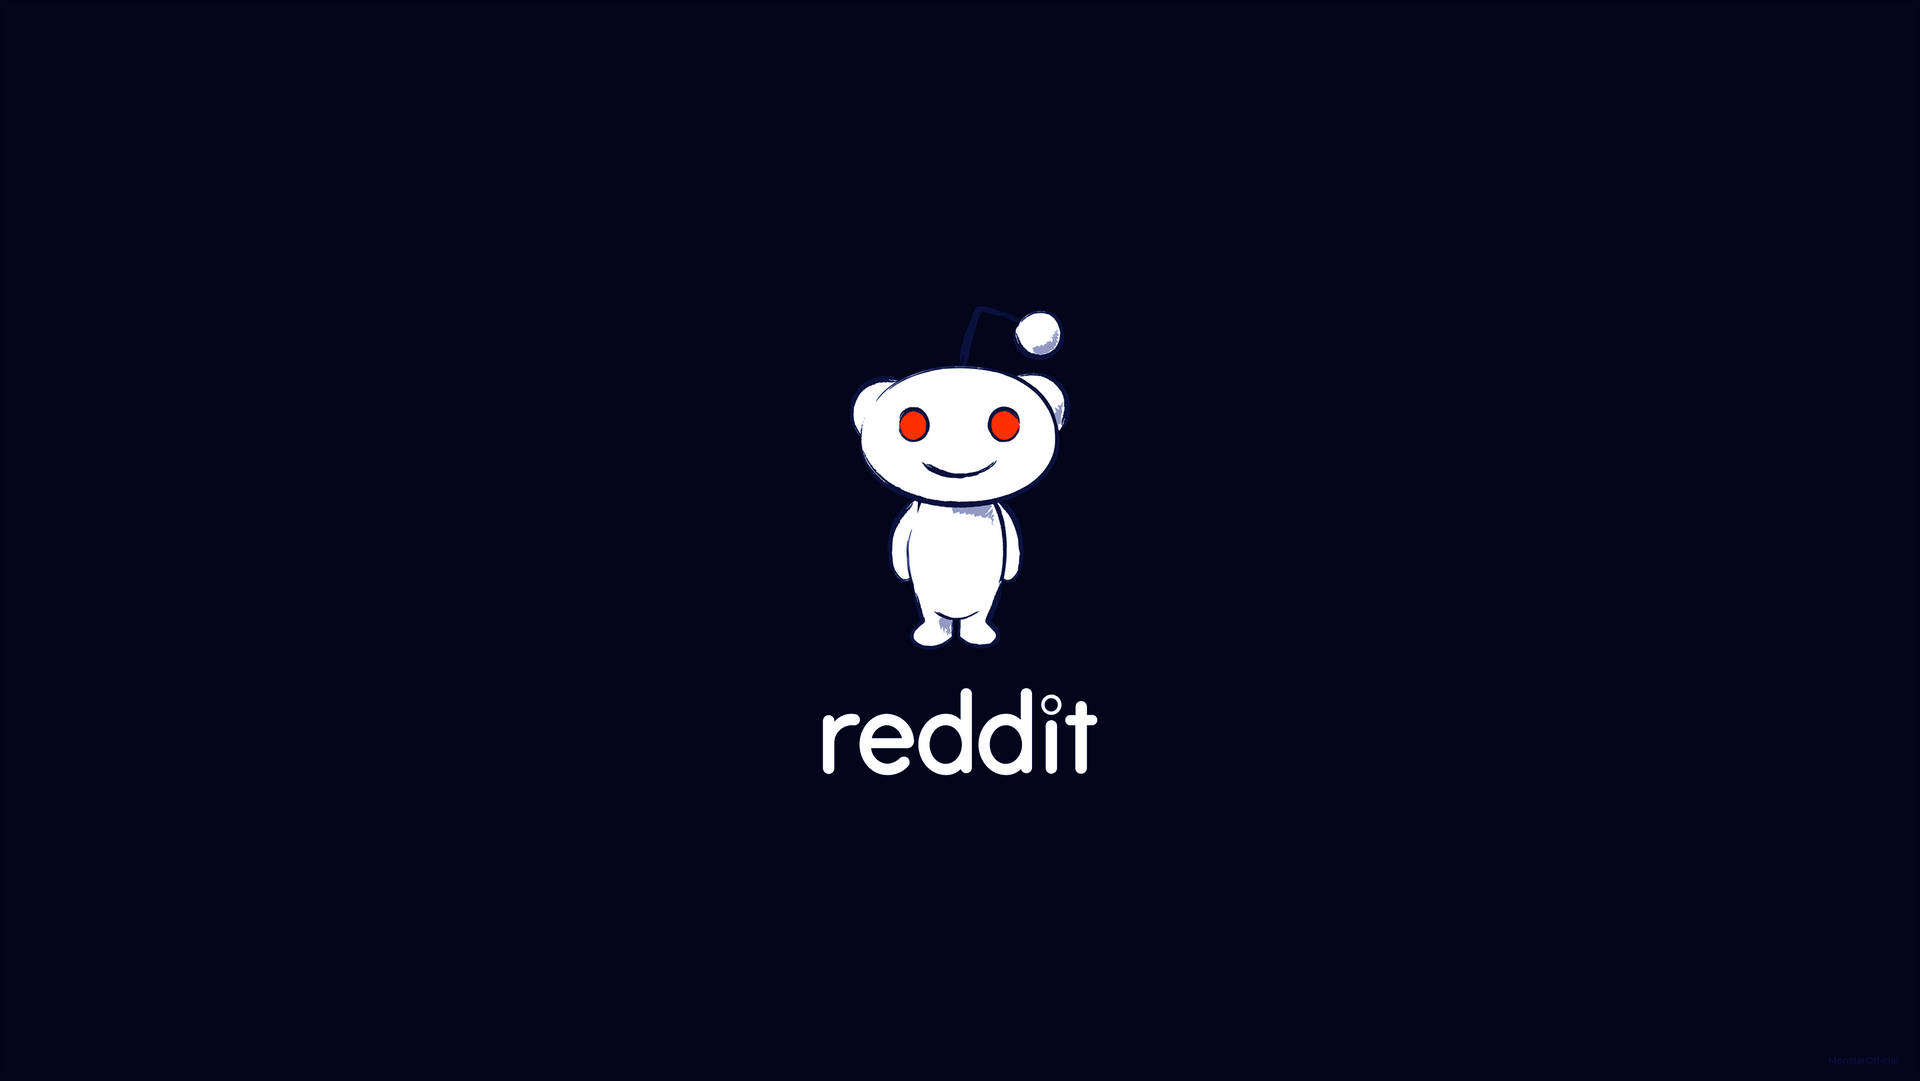 Black Minimal Reddit Logo And Title